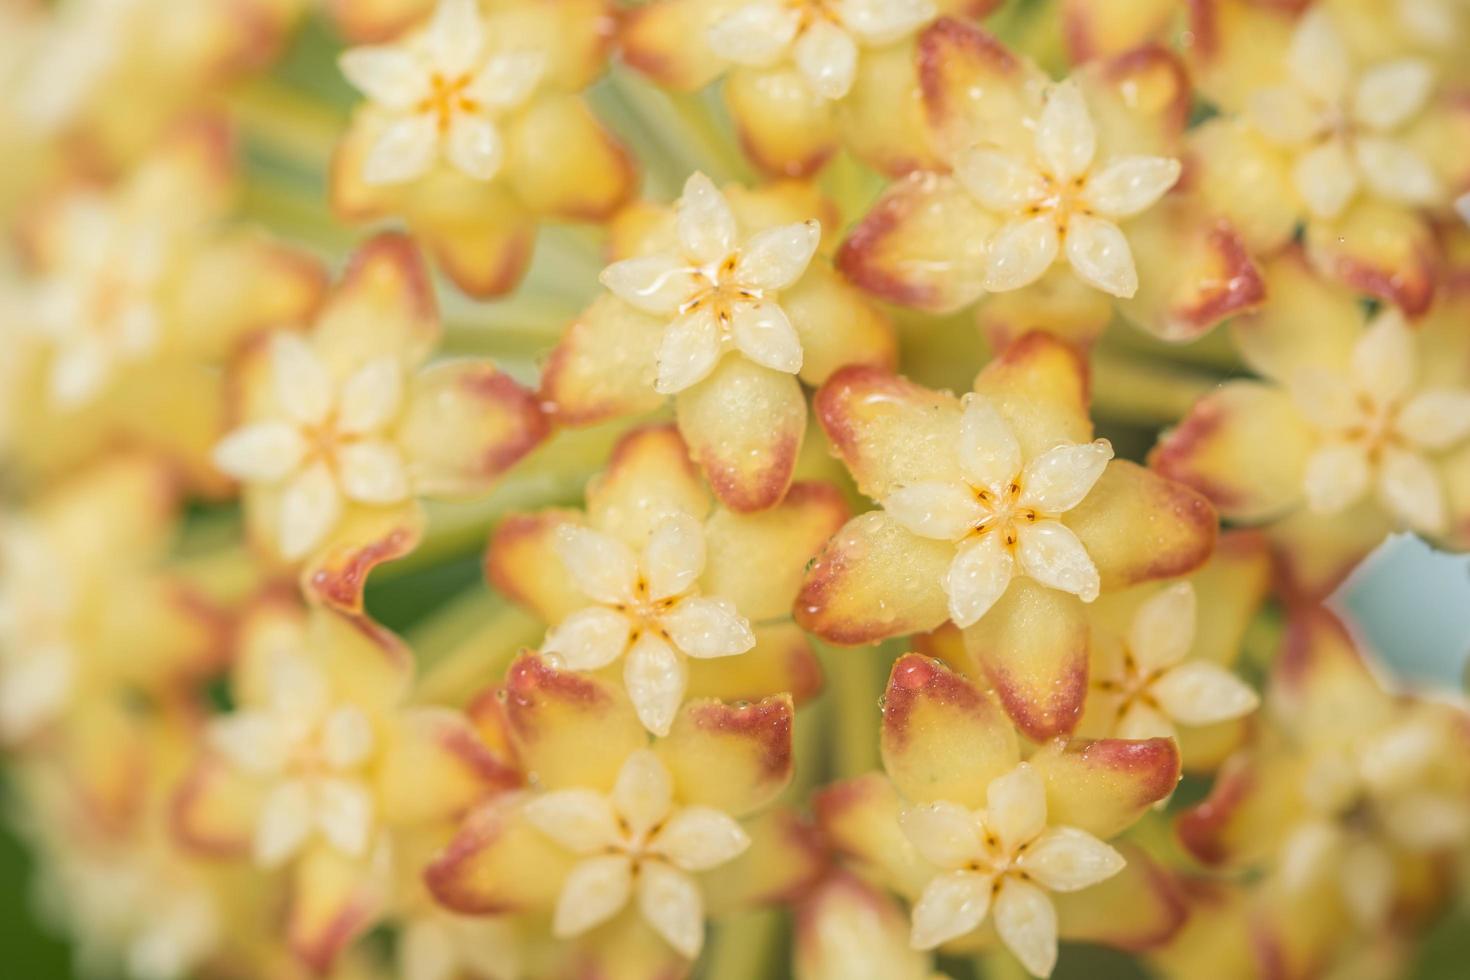 hoya bloemen, close-up foto